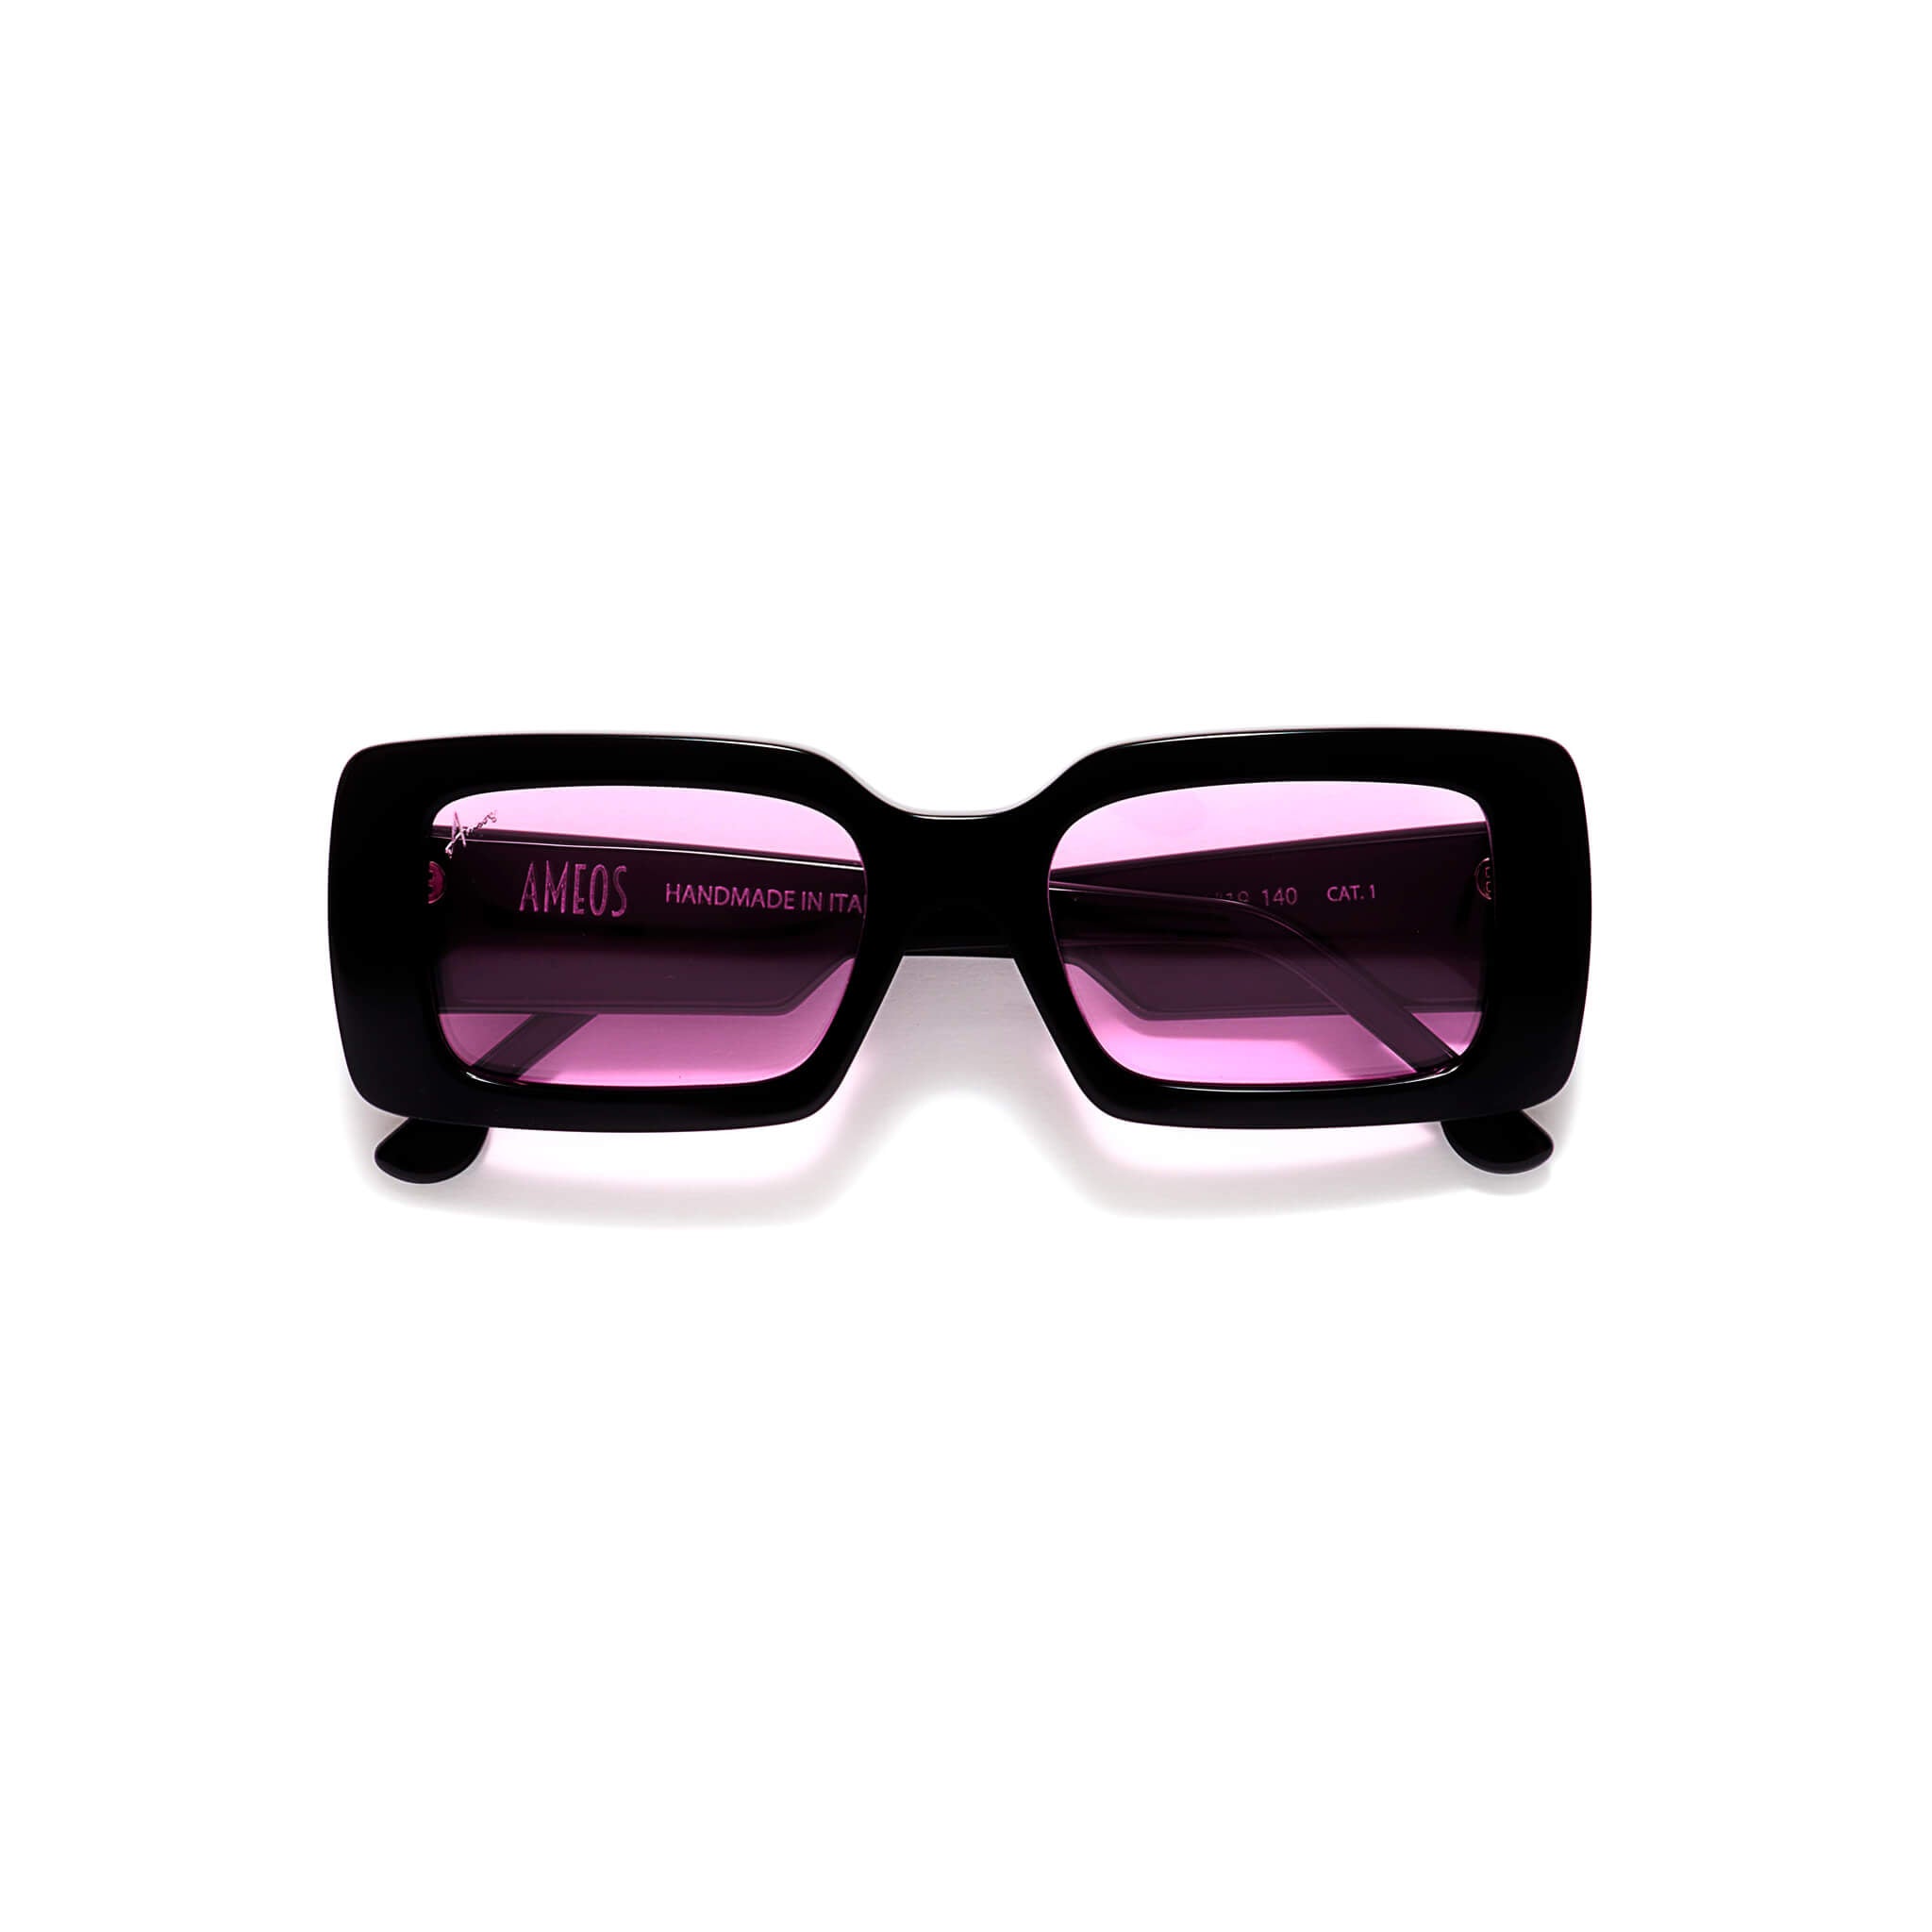 Black rectangular sunglasses with pink lenses